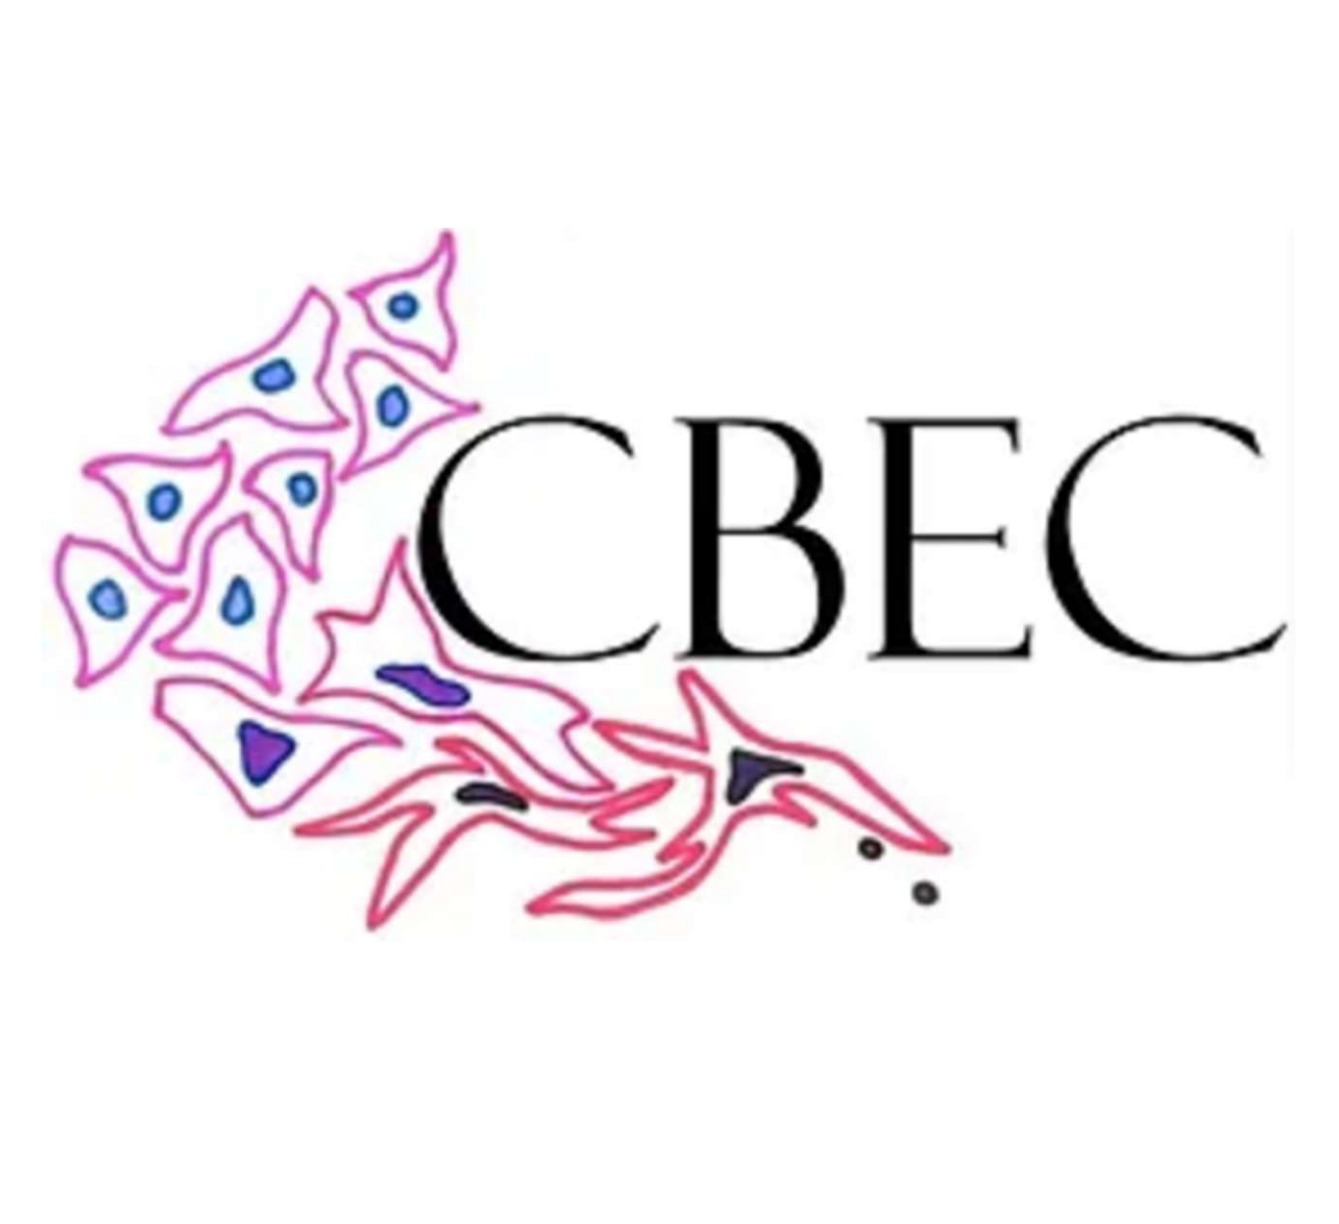 CBEC - Cell Biology Education Consortium (RCN-UBE Introduction)